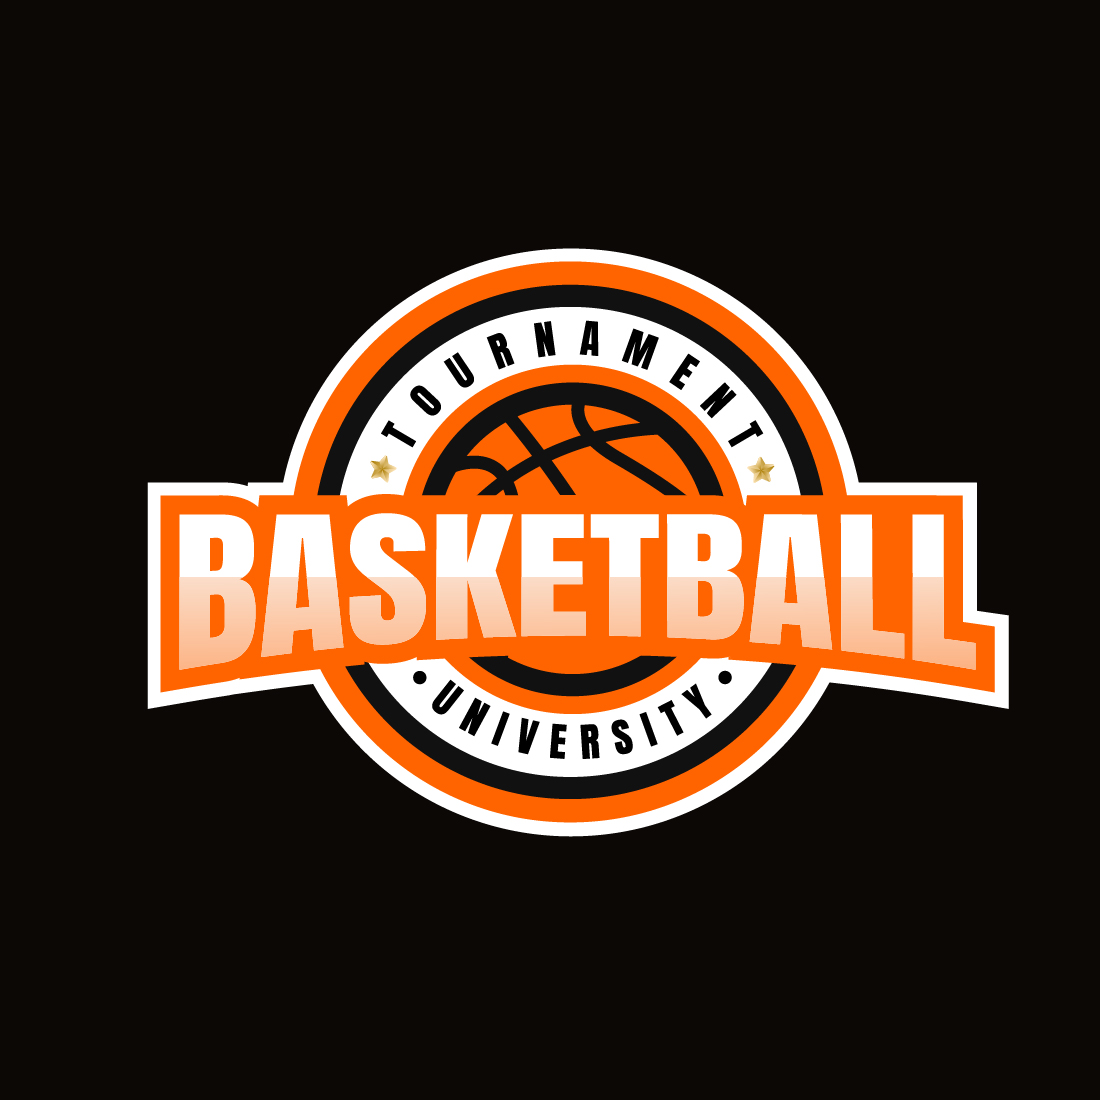 Basketball Championship Logo Template